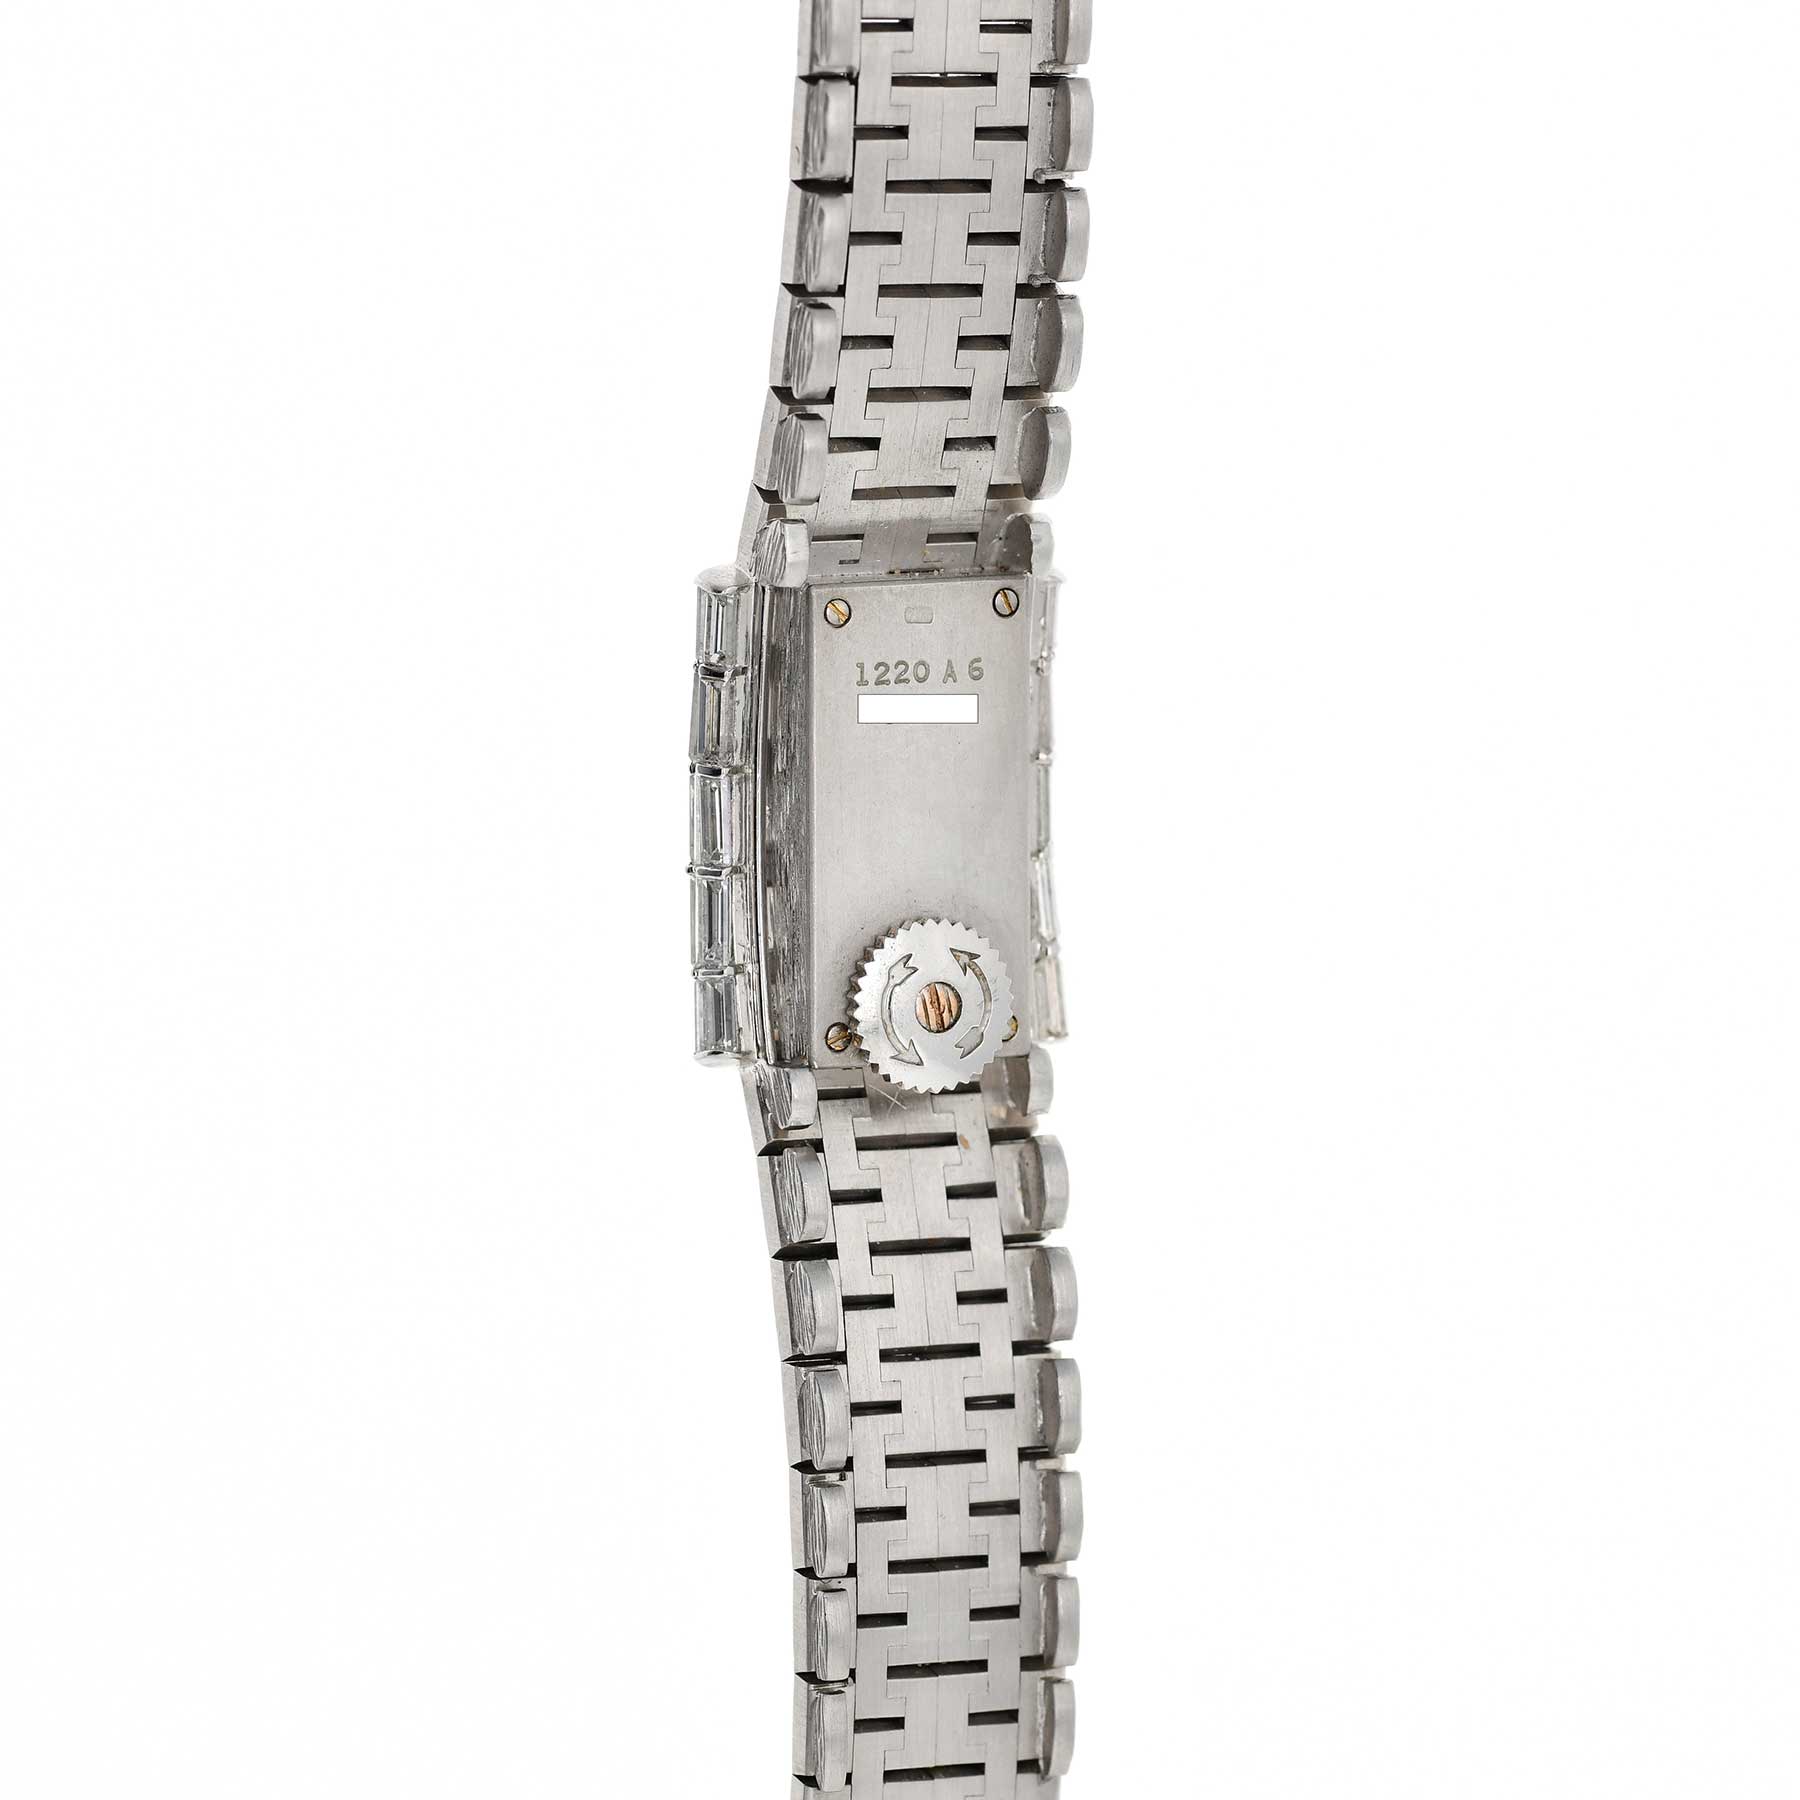 piaget-ref1220A6-baguette-diamond-bracelet-watch-img-main2